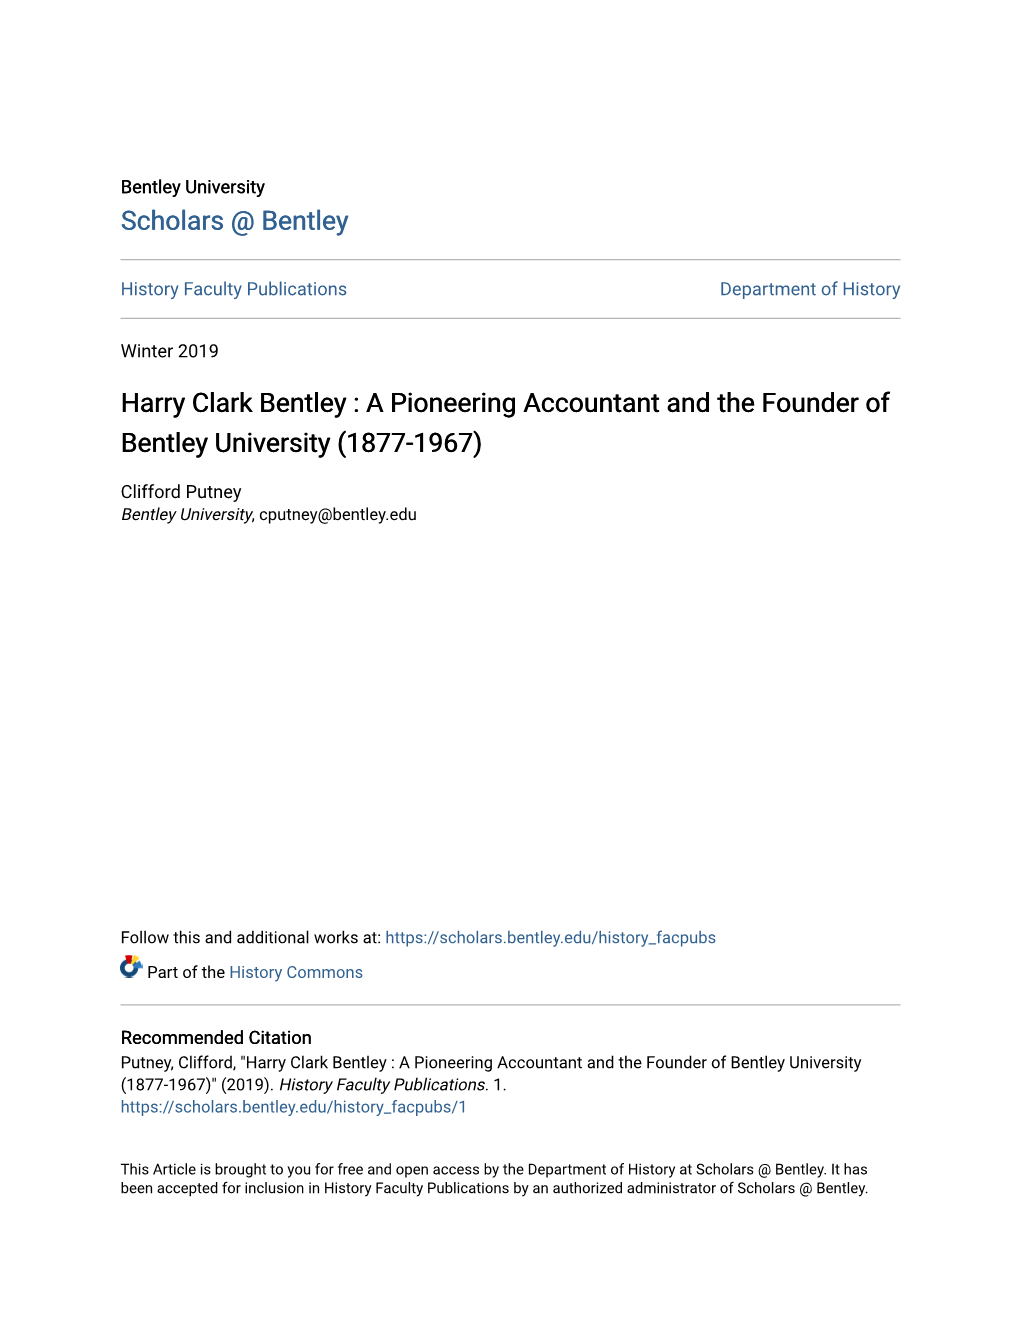 Harry Clark Bentley : a Pioneering Accountant and the Founder of Bentley University (1877-1967)